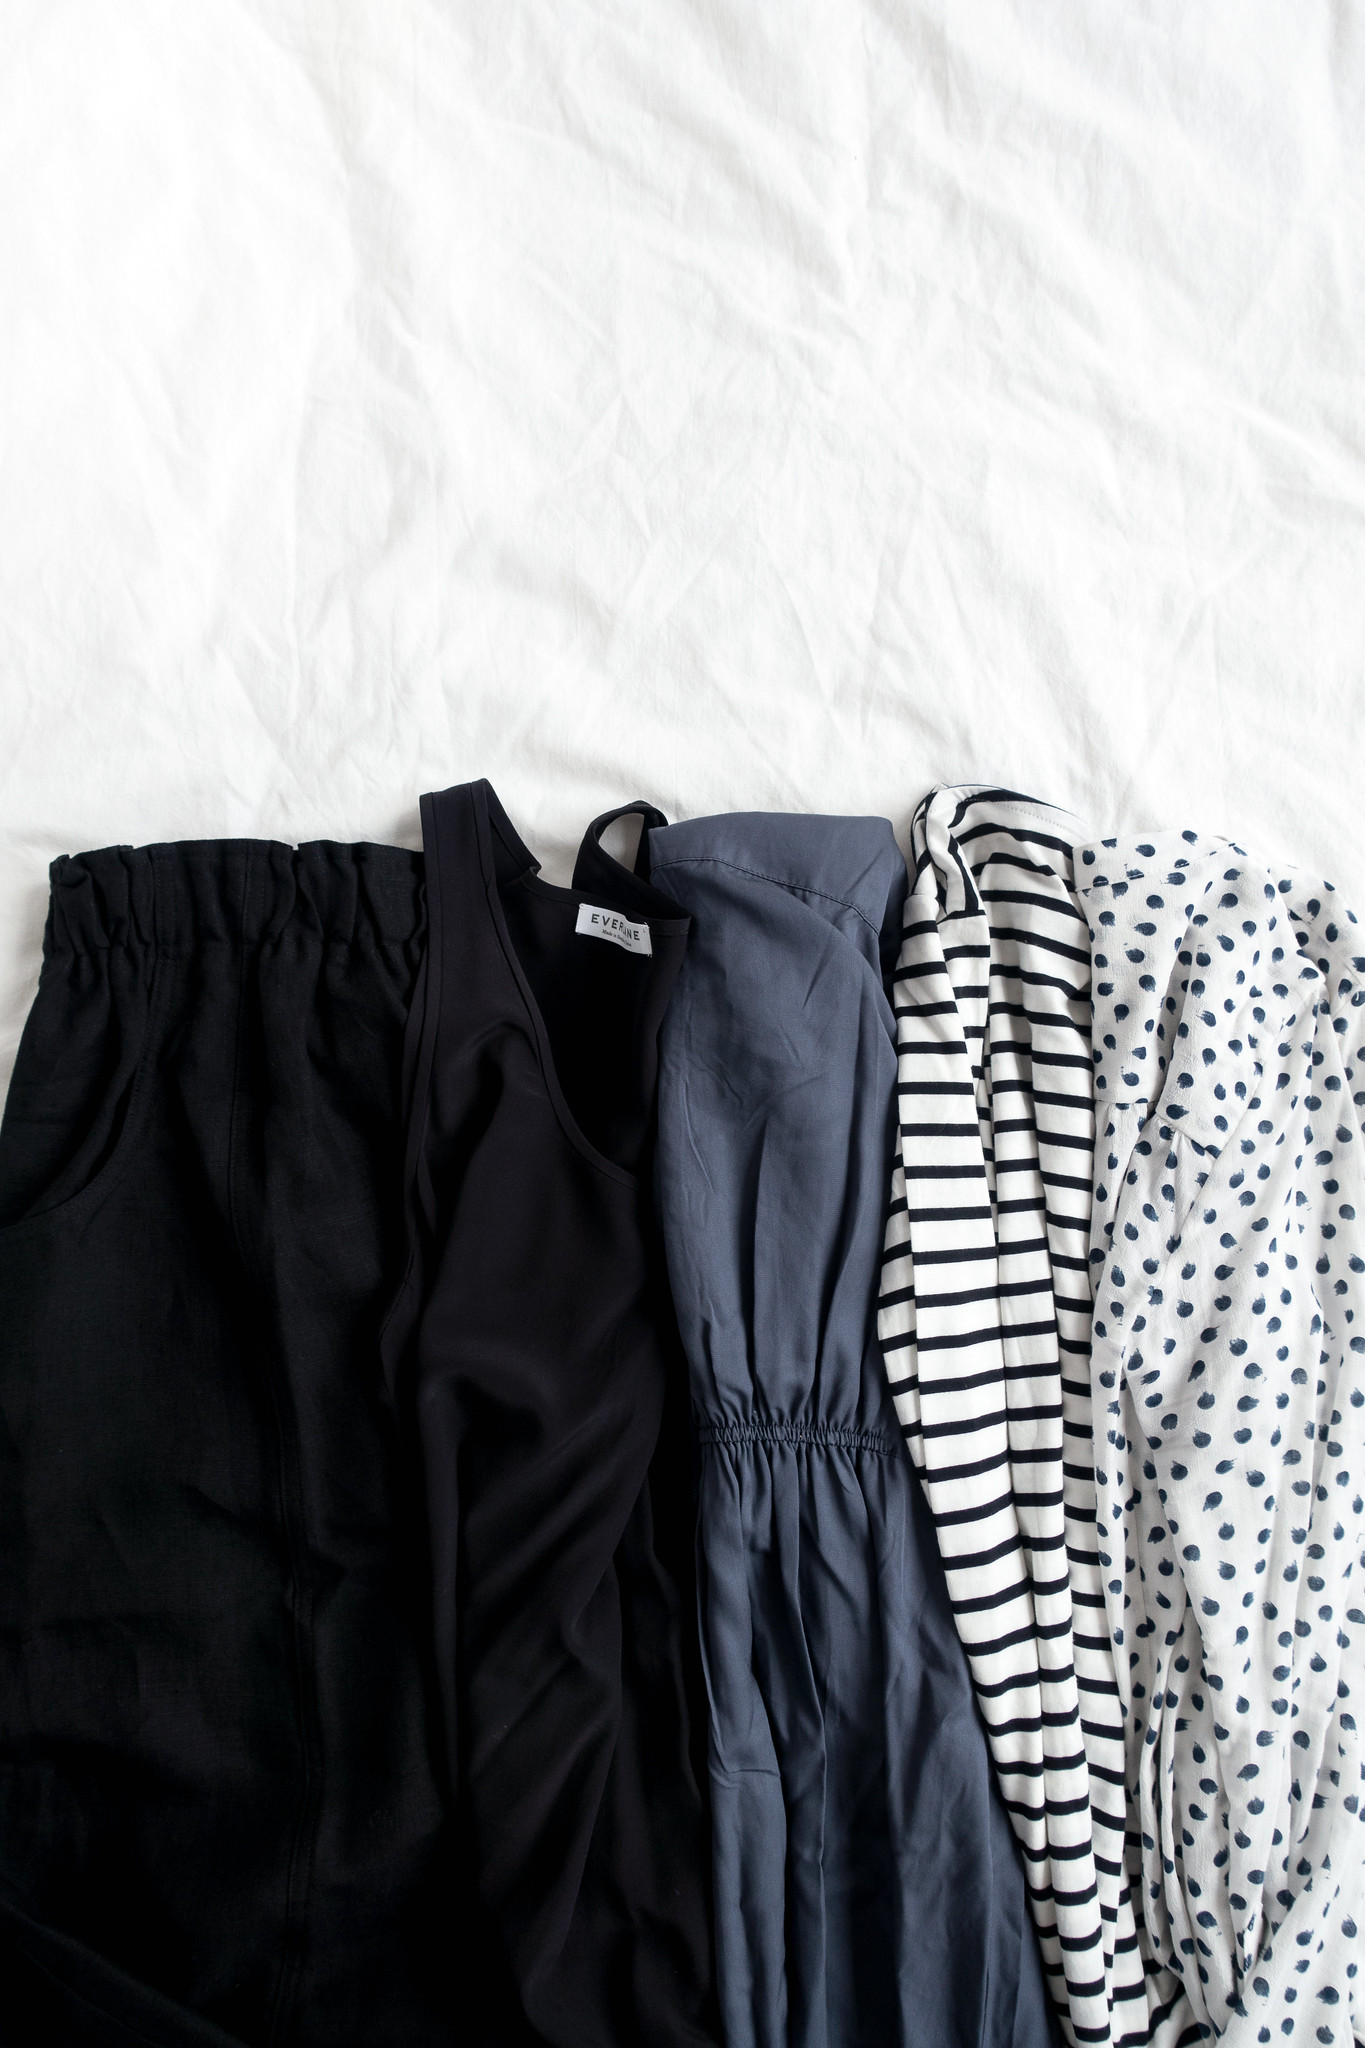 5 Ways To Make Your Wardrobe More Conscious